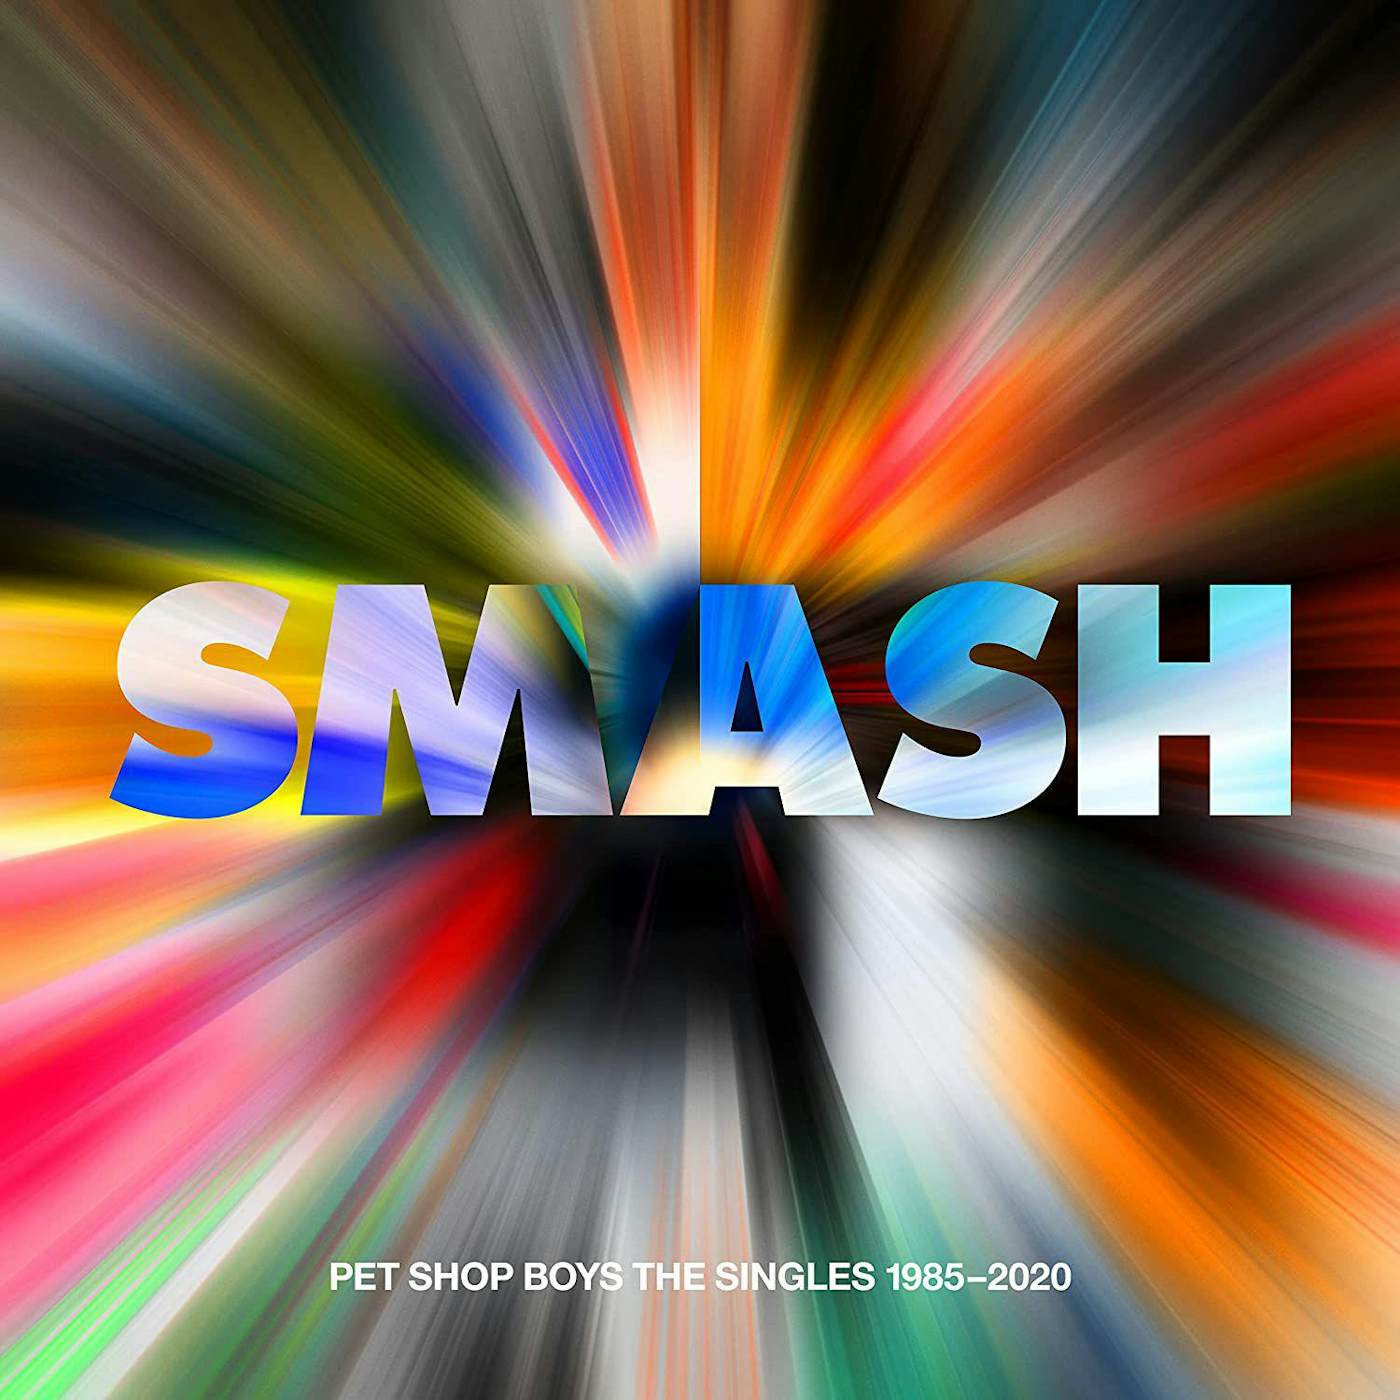 Pet Shop Boys Smash: The Singles 1985-2020 (6LP) Box Set (Vinyl)